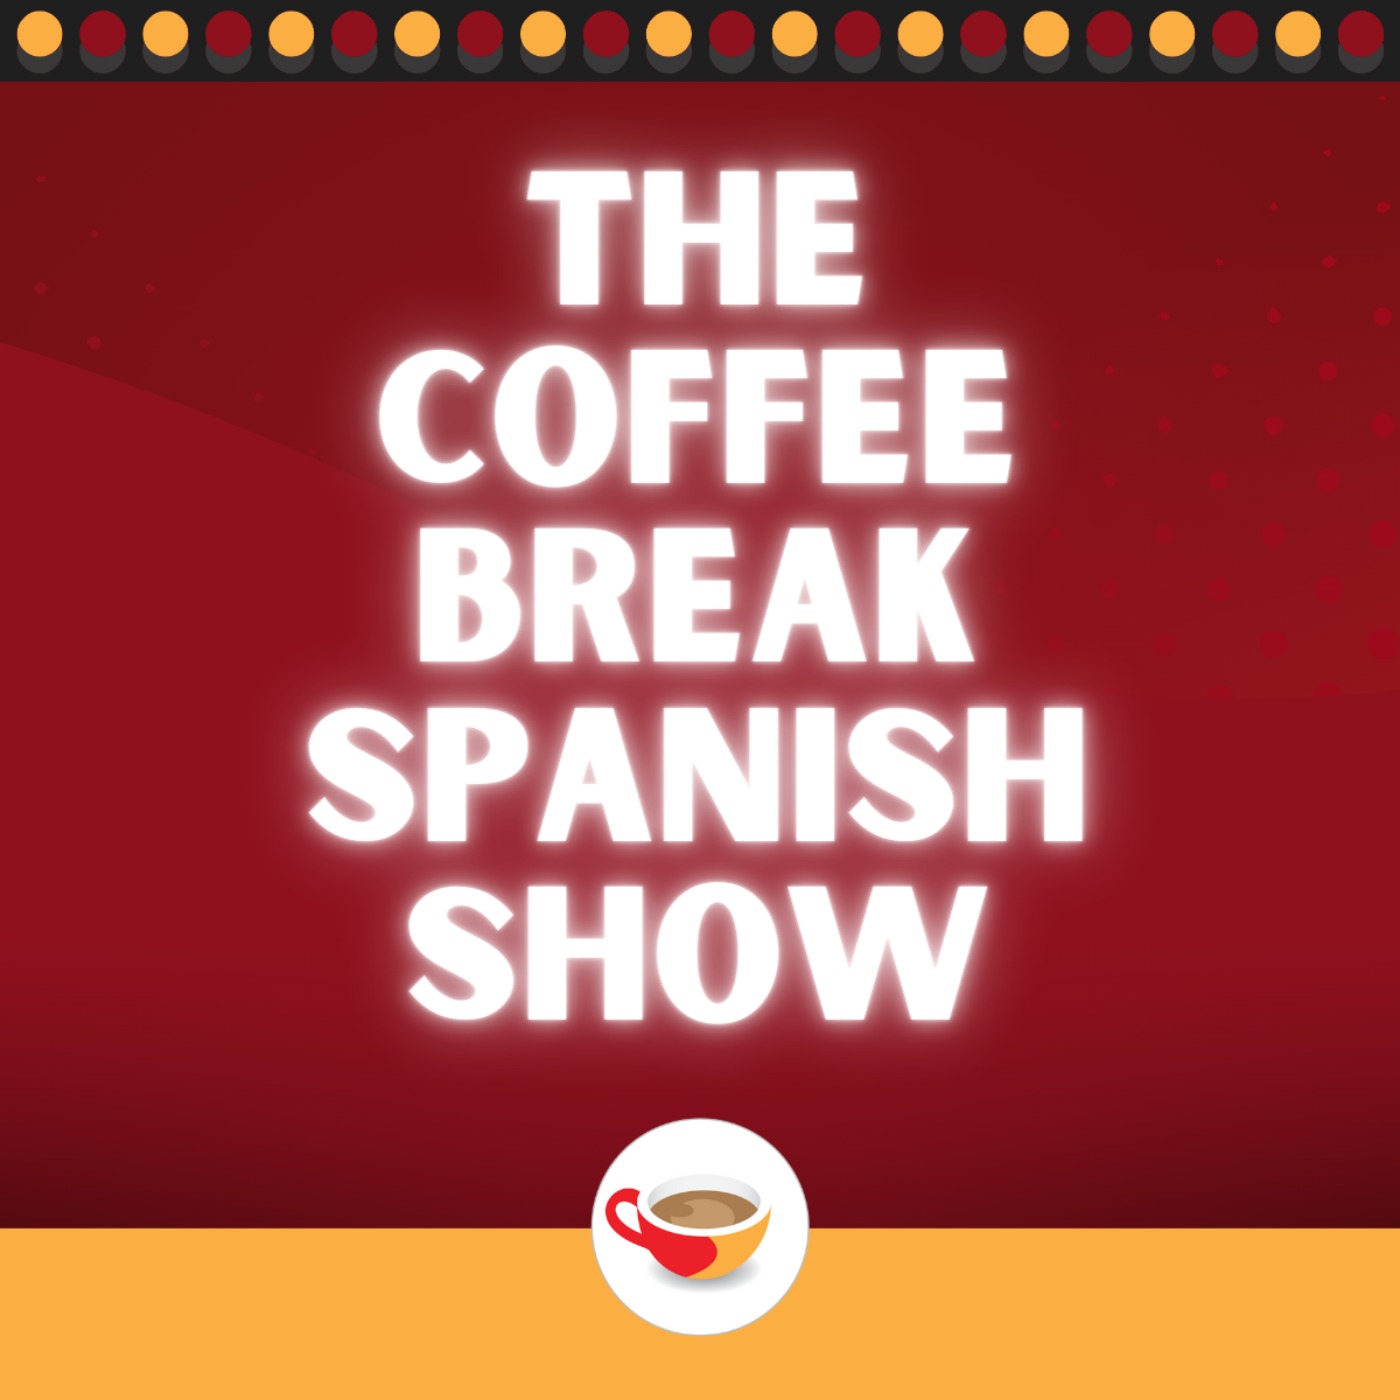 Introducing the Coffee Break Spanish Show